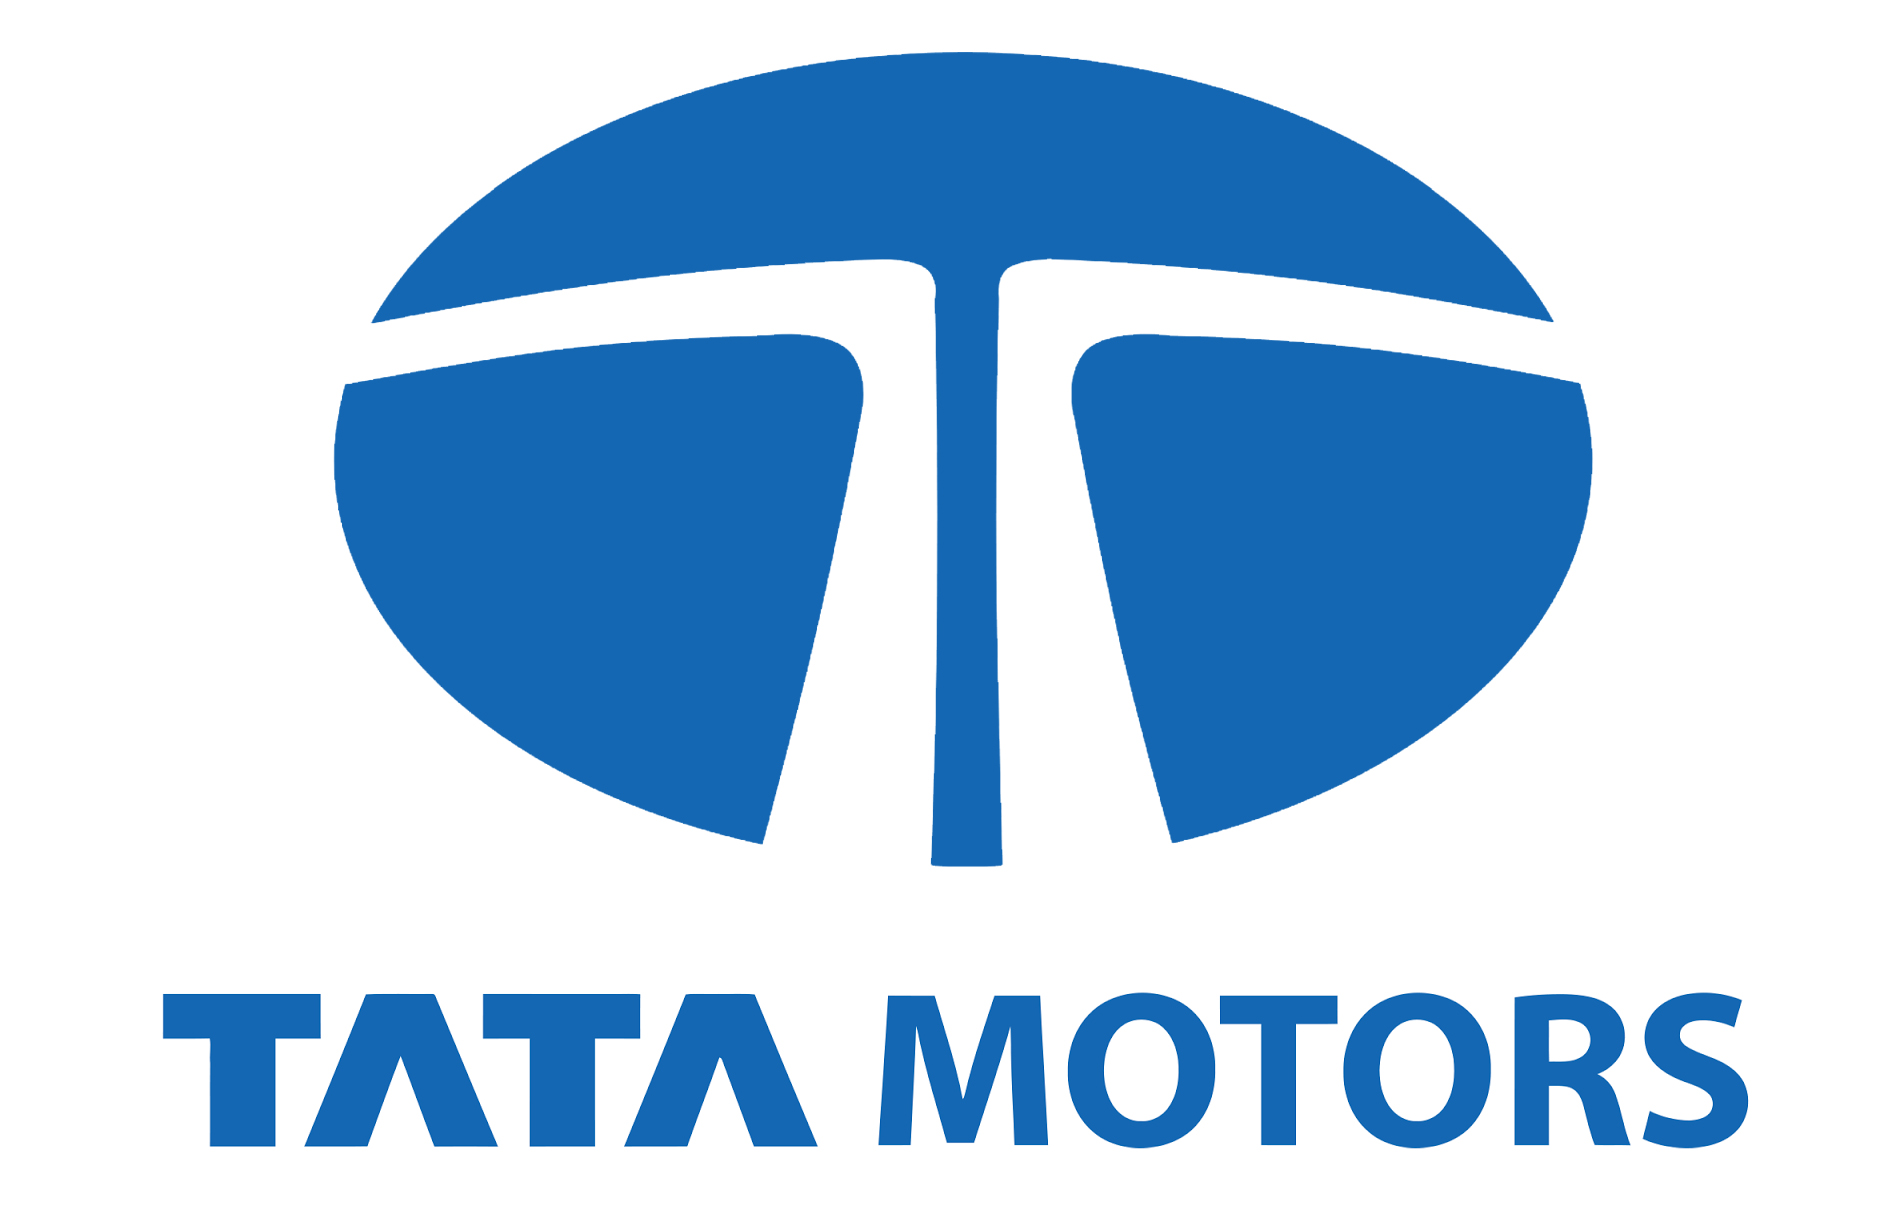 Tata Motors Cars Showroom - Bhasin Motors|Service Center|Automotive